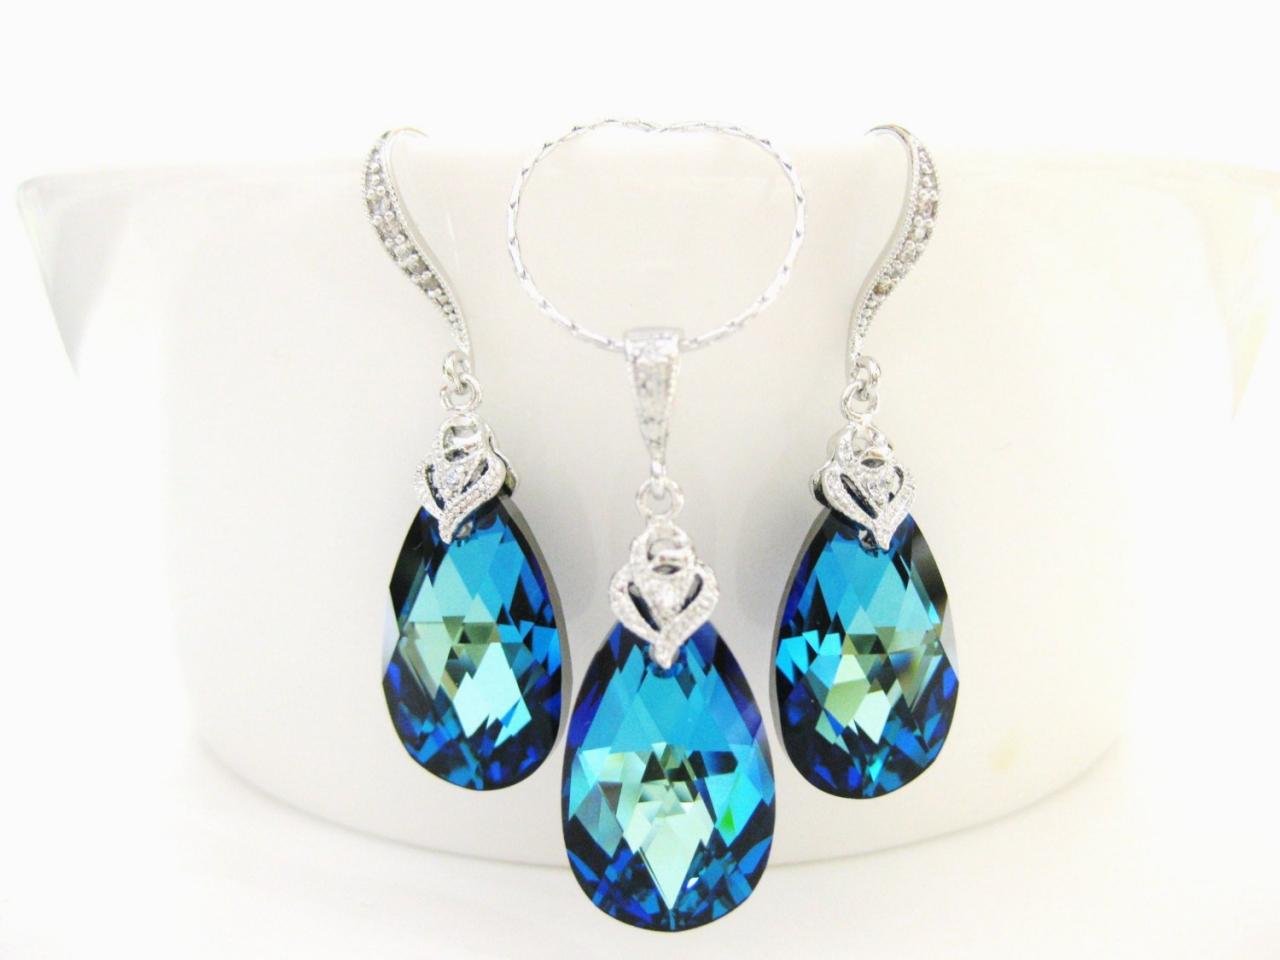 Bermuda Blue Teardrop Earrings & Necklace Gift Set Swarovski Crystal Wedding Jewelry Bridesmaid Gift Bridal Drop Earrings (ne043)